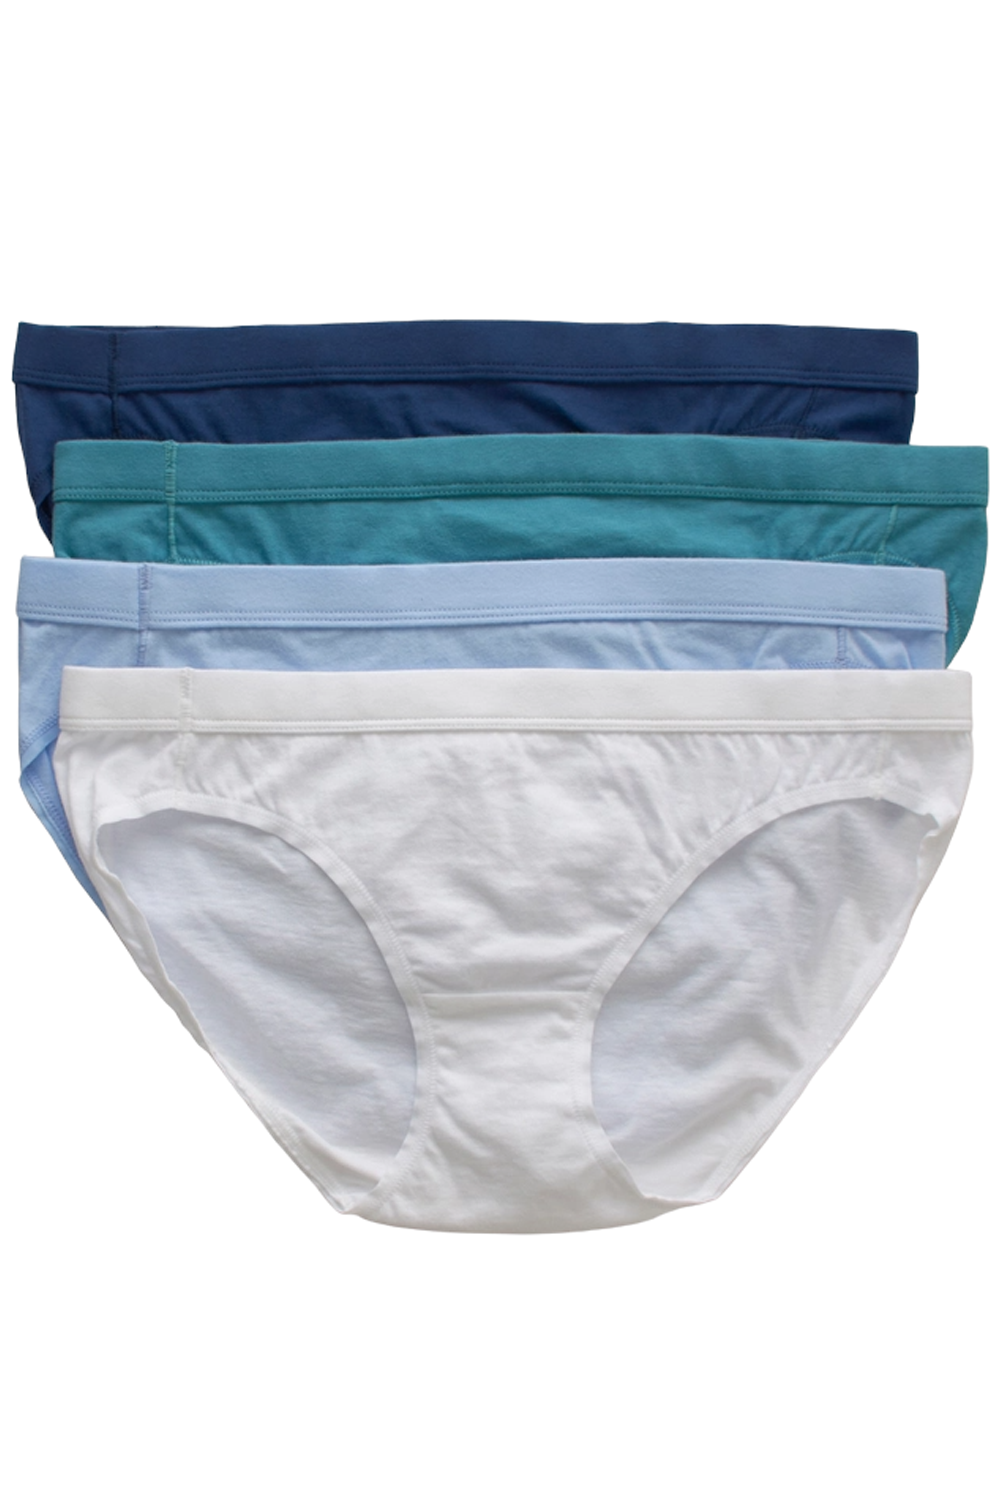 Hanes, Intimates & Sleepwear, Hanes Womens Cotton Bikini Underwear Panties